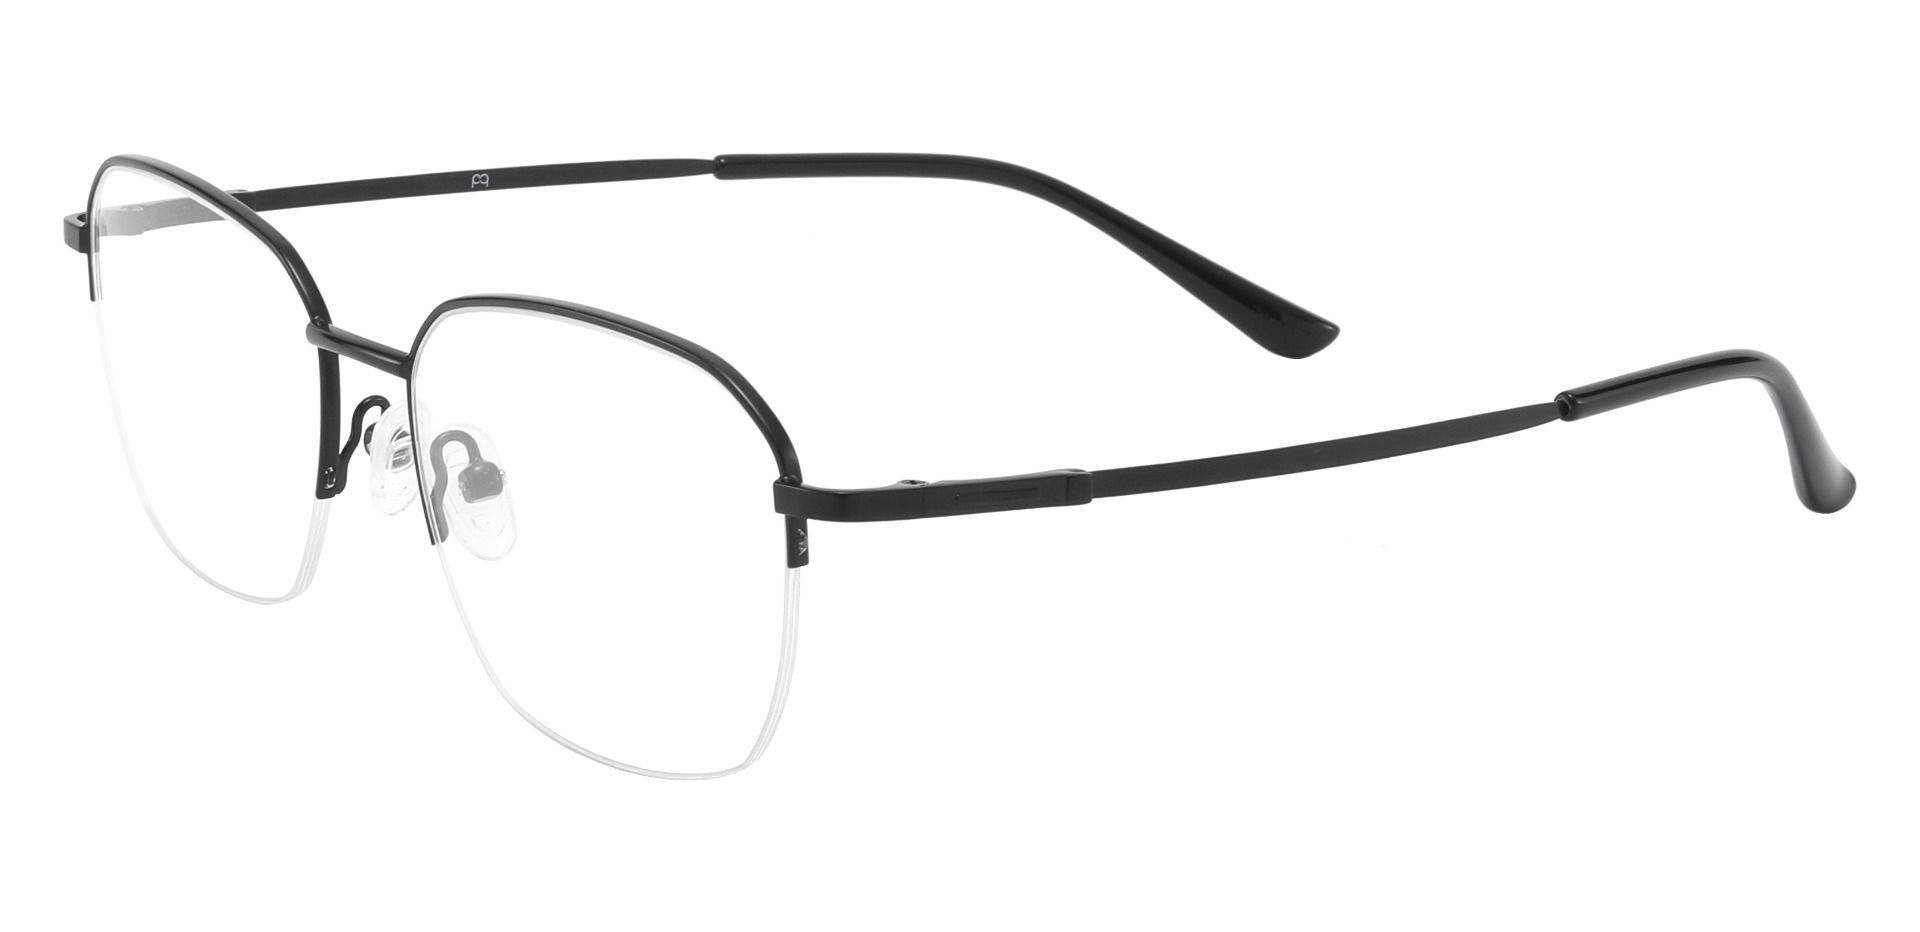 Wilton Geometric Eyeglasses Frame - Black